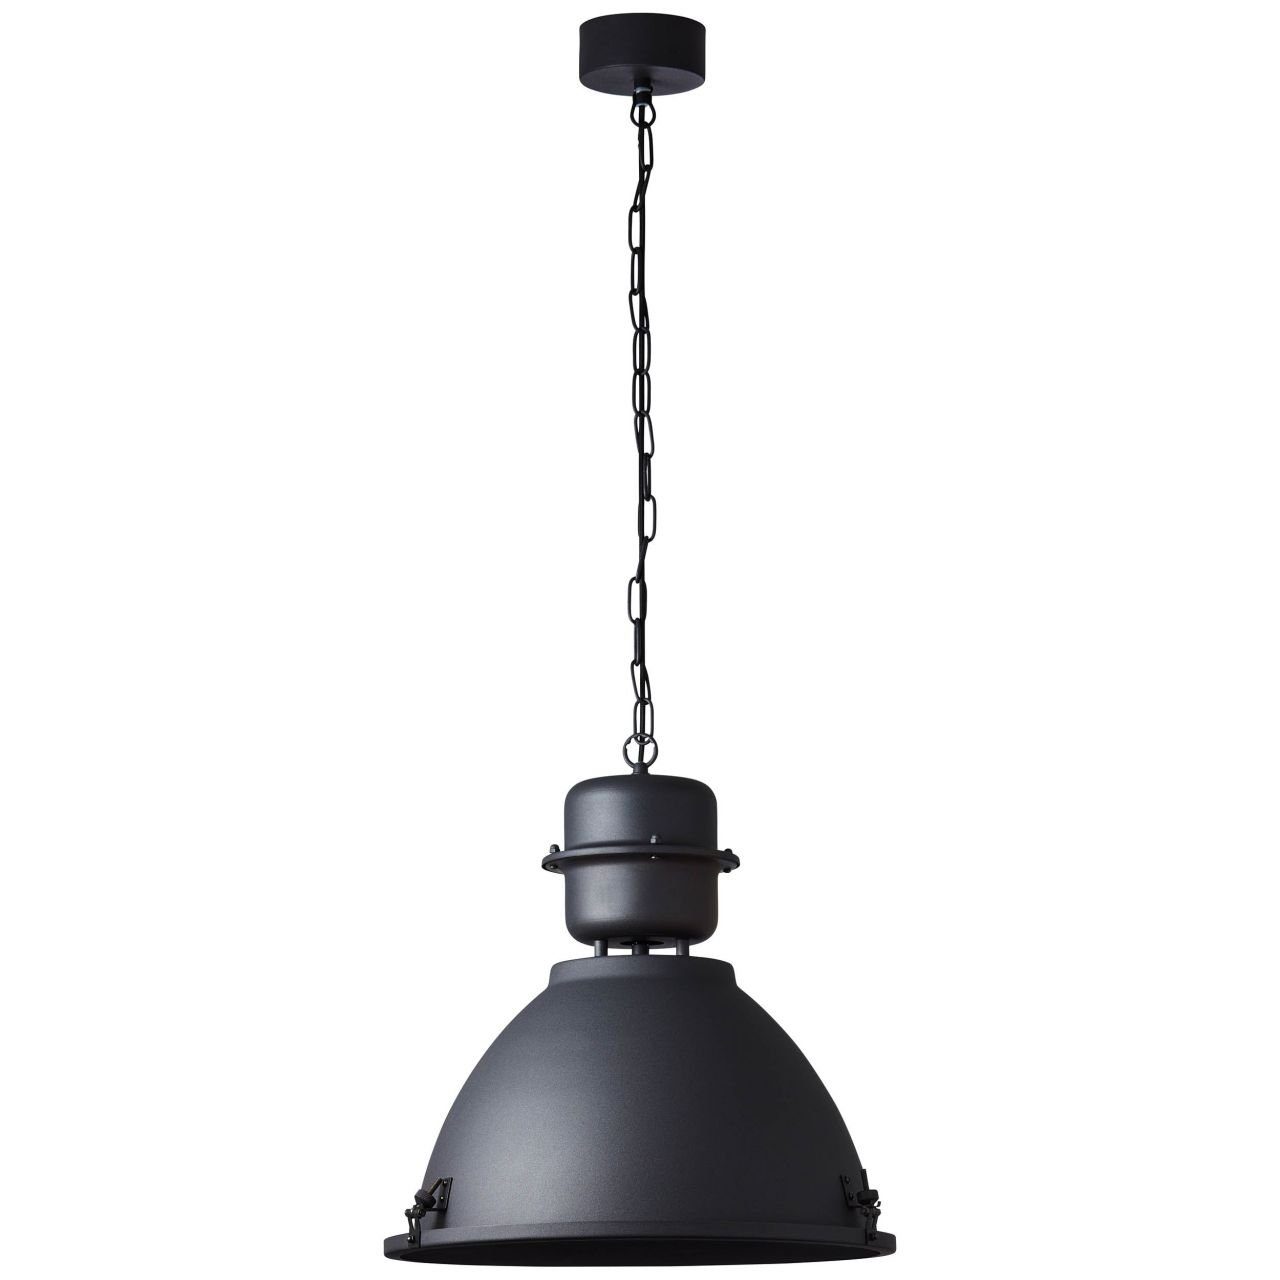 Kiki Metall, schwarz 1x A60, Kiki, Pendelleuchte Brilliant Lampe, E27, Pendelleuchte 52 49cm korund,